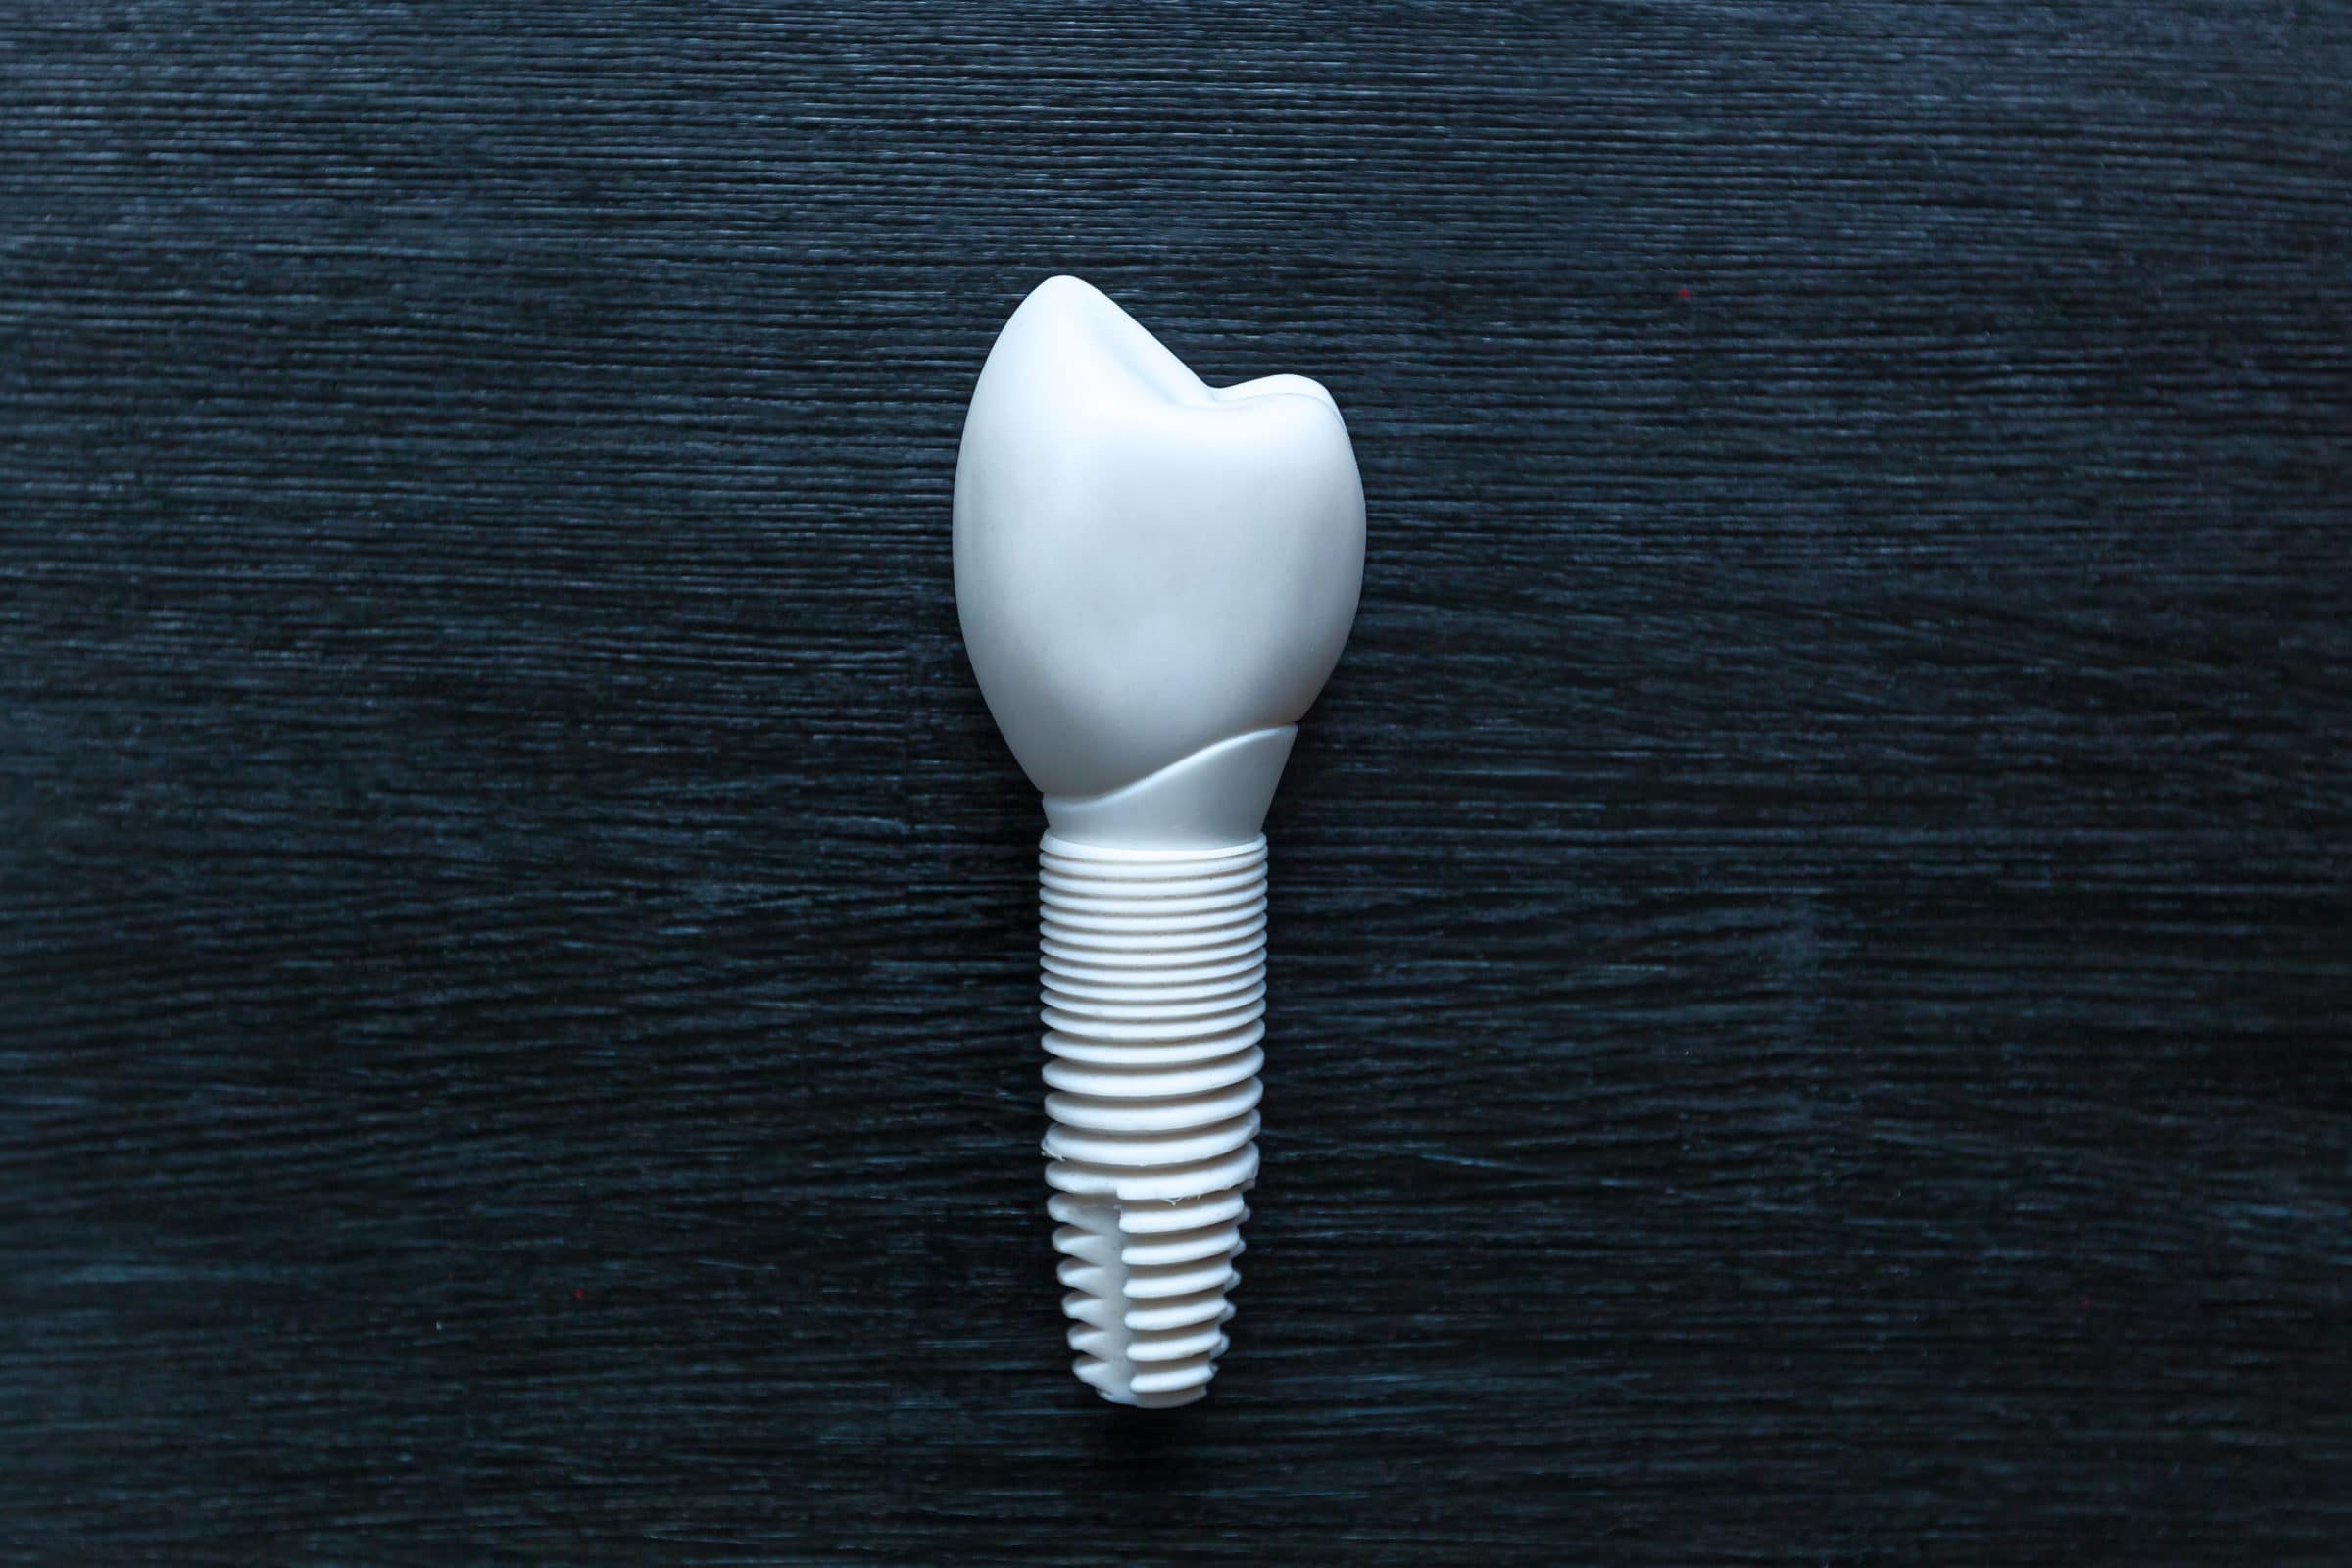 مواد ایمپلنت دندان: زیرکونیوم